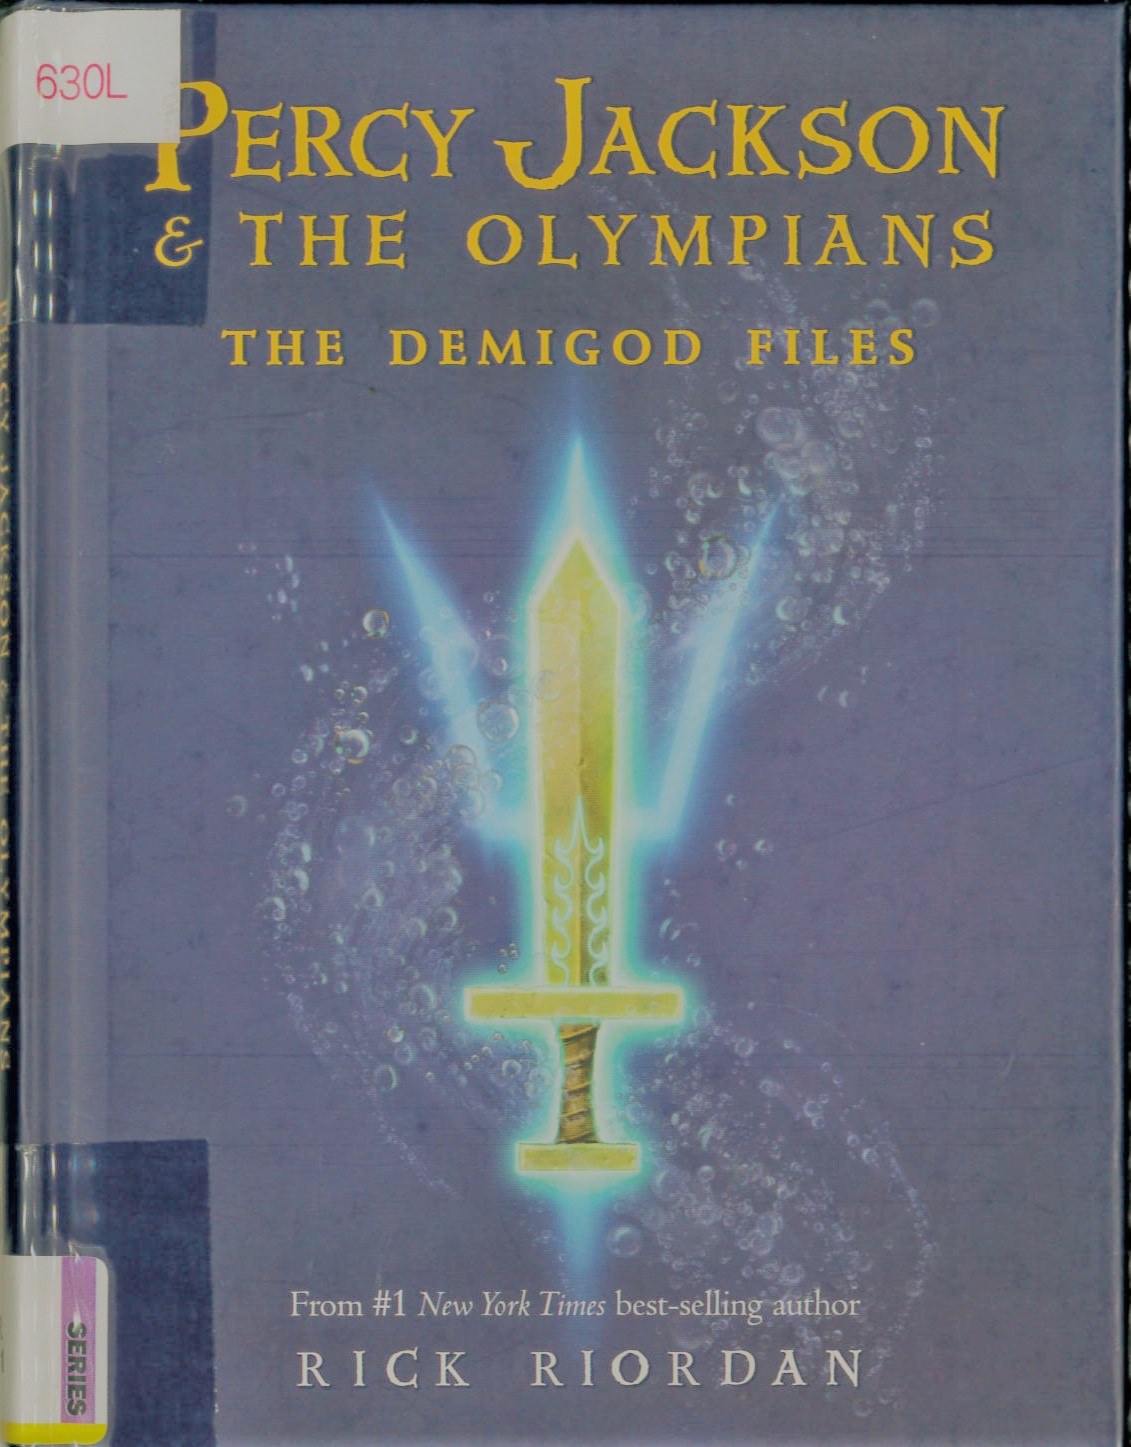 The demigod files /